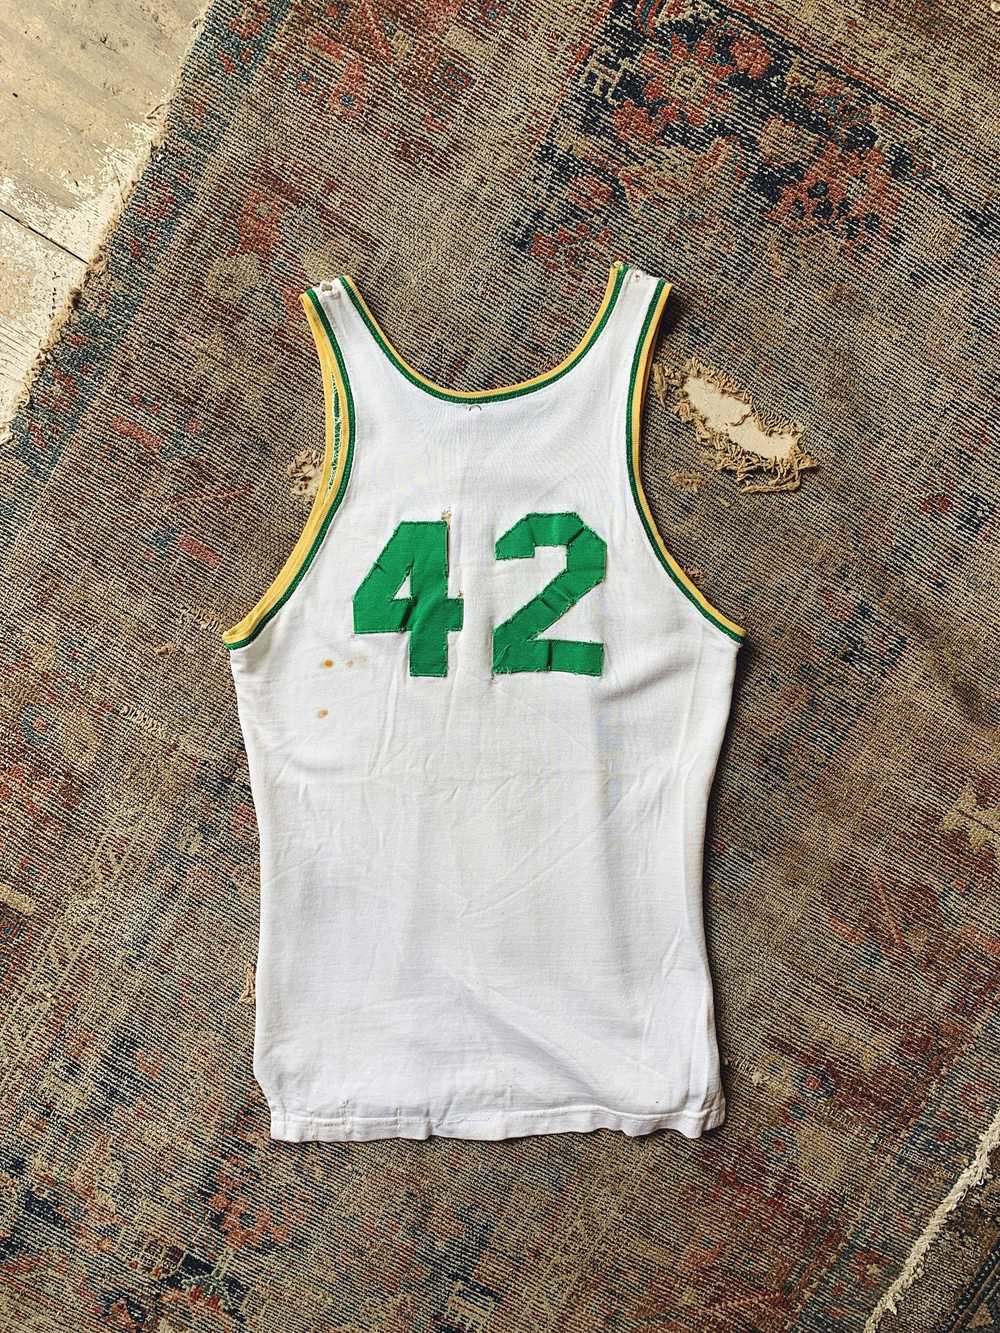 Vintage Rawling’s Brand “42” Basketball Jersey - image 4